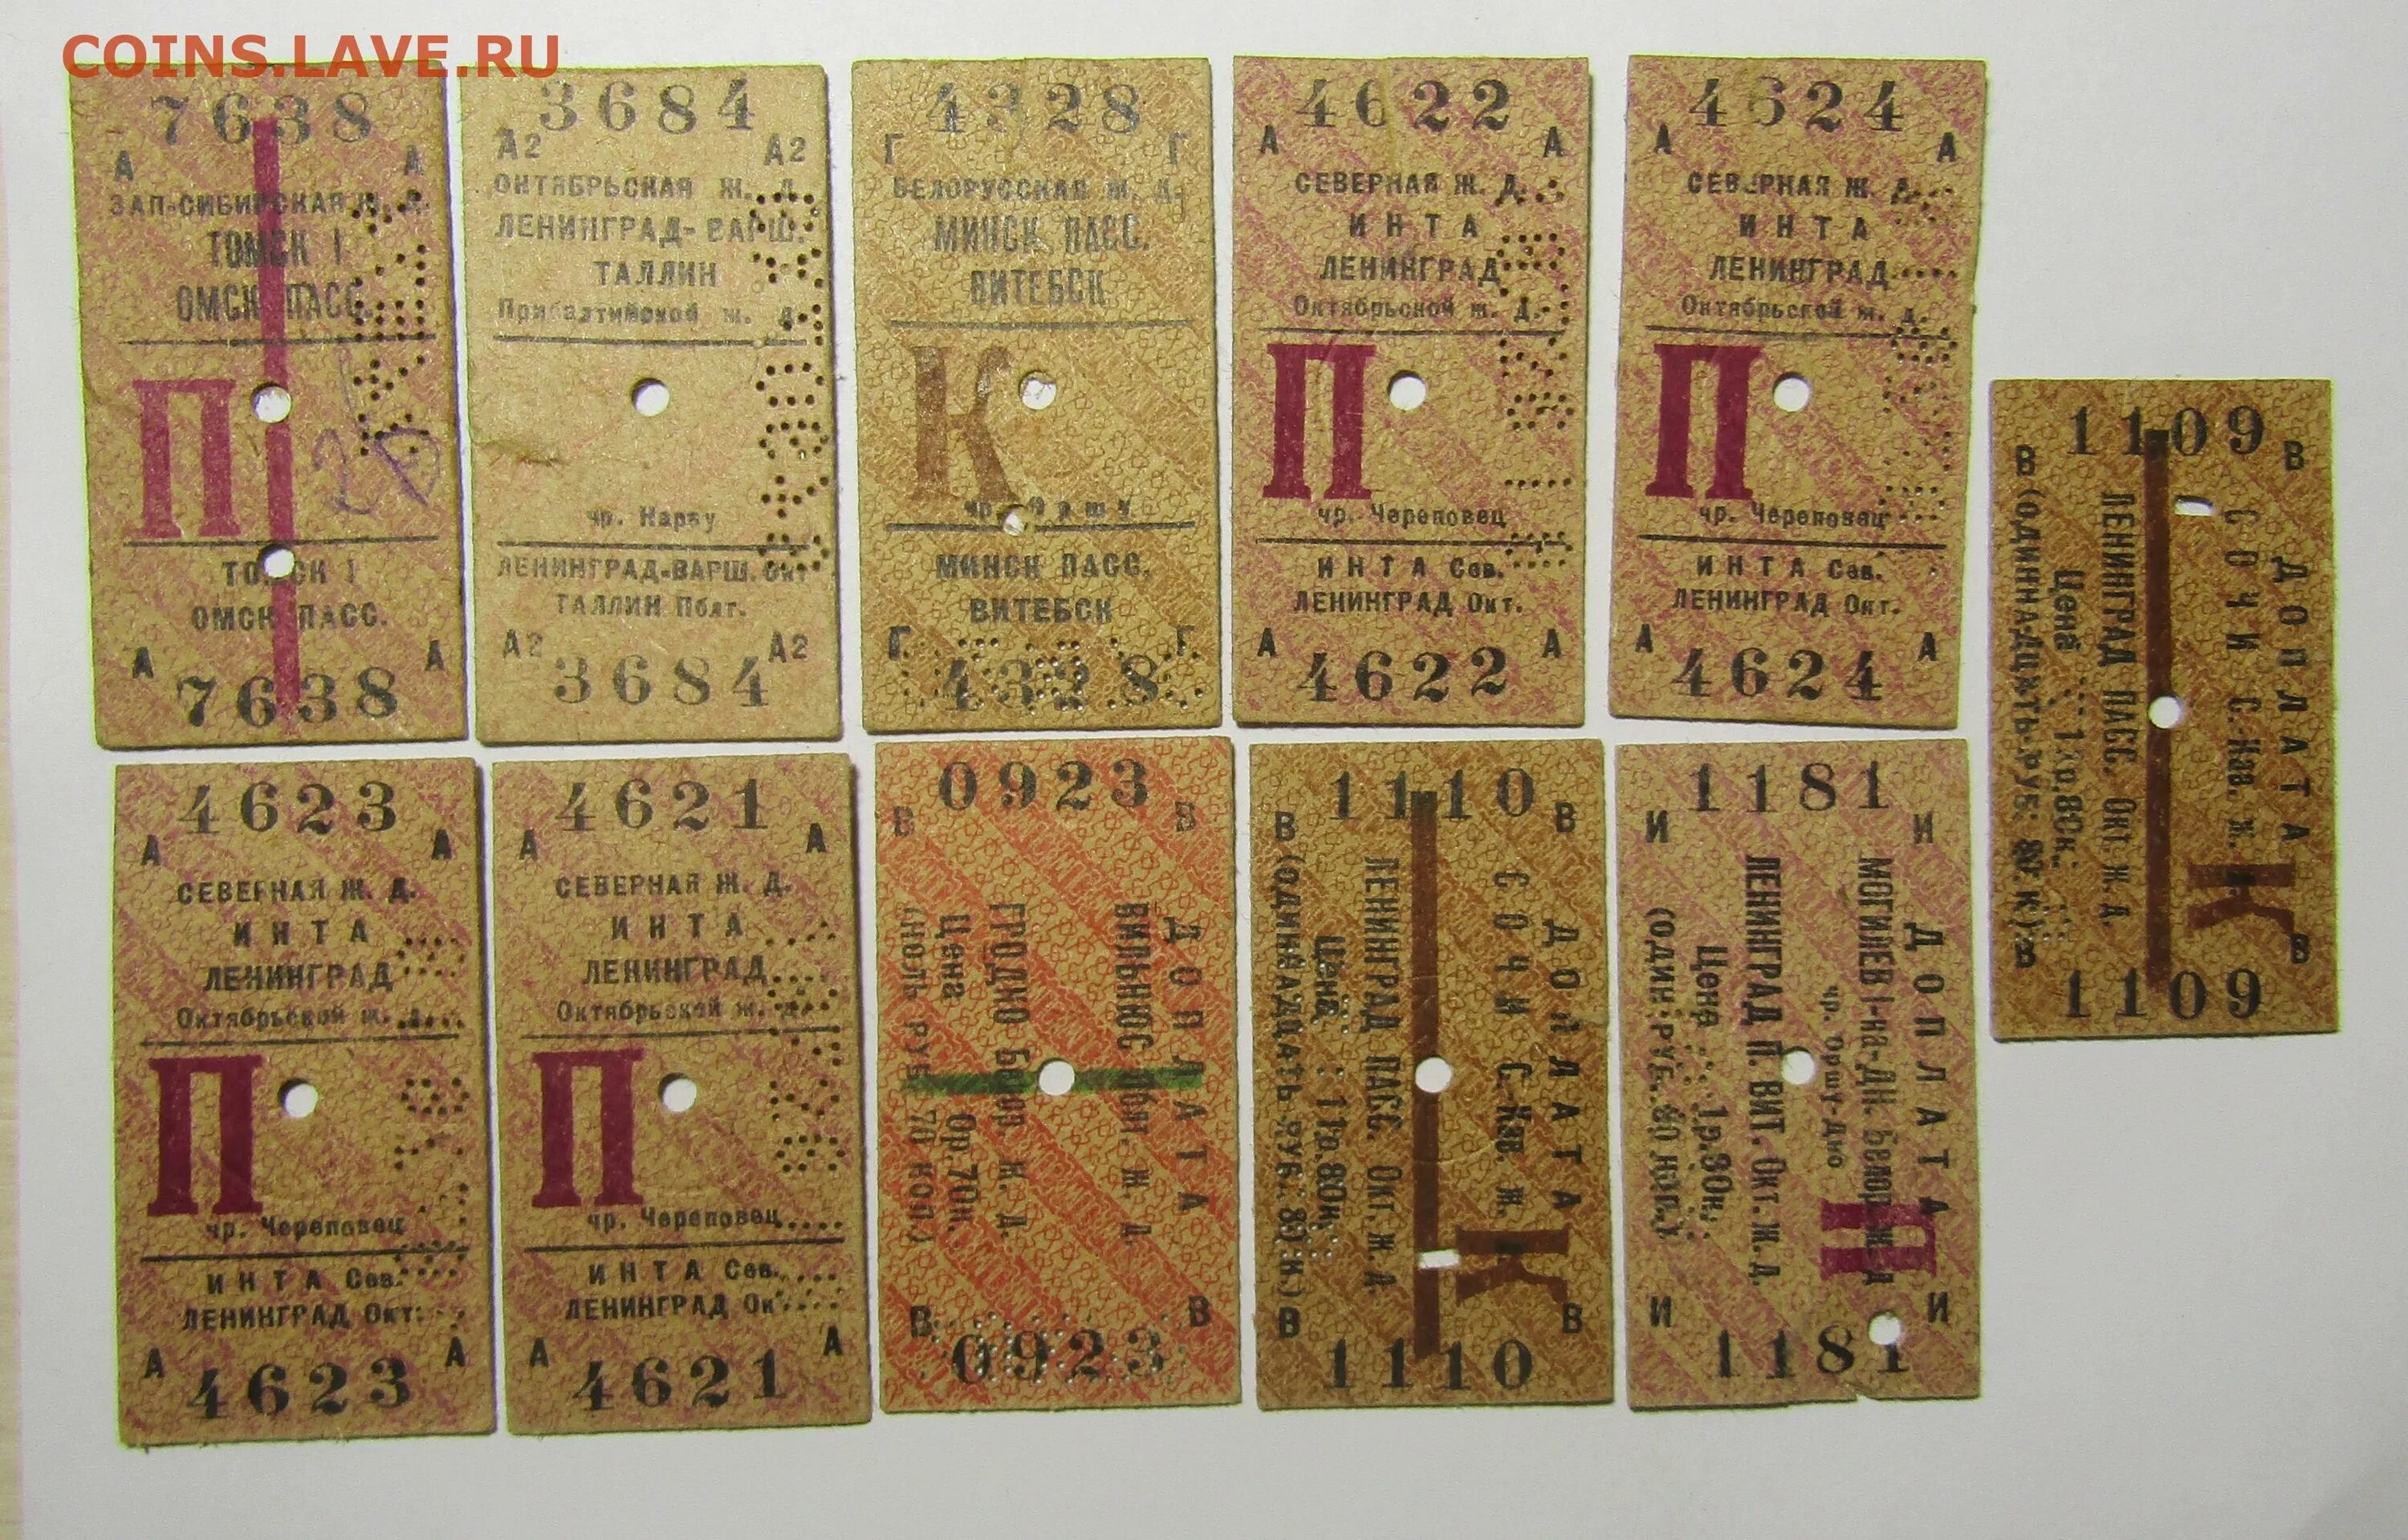 Билет жд таксимо. Старый билет. Советские железнодорожные билеты. Железнодорожный билет СССР. Советские картонные билеты на поезд.